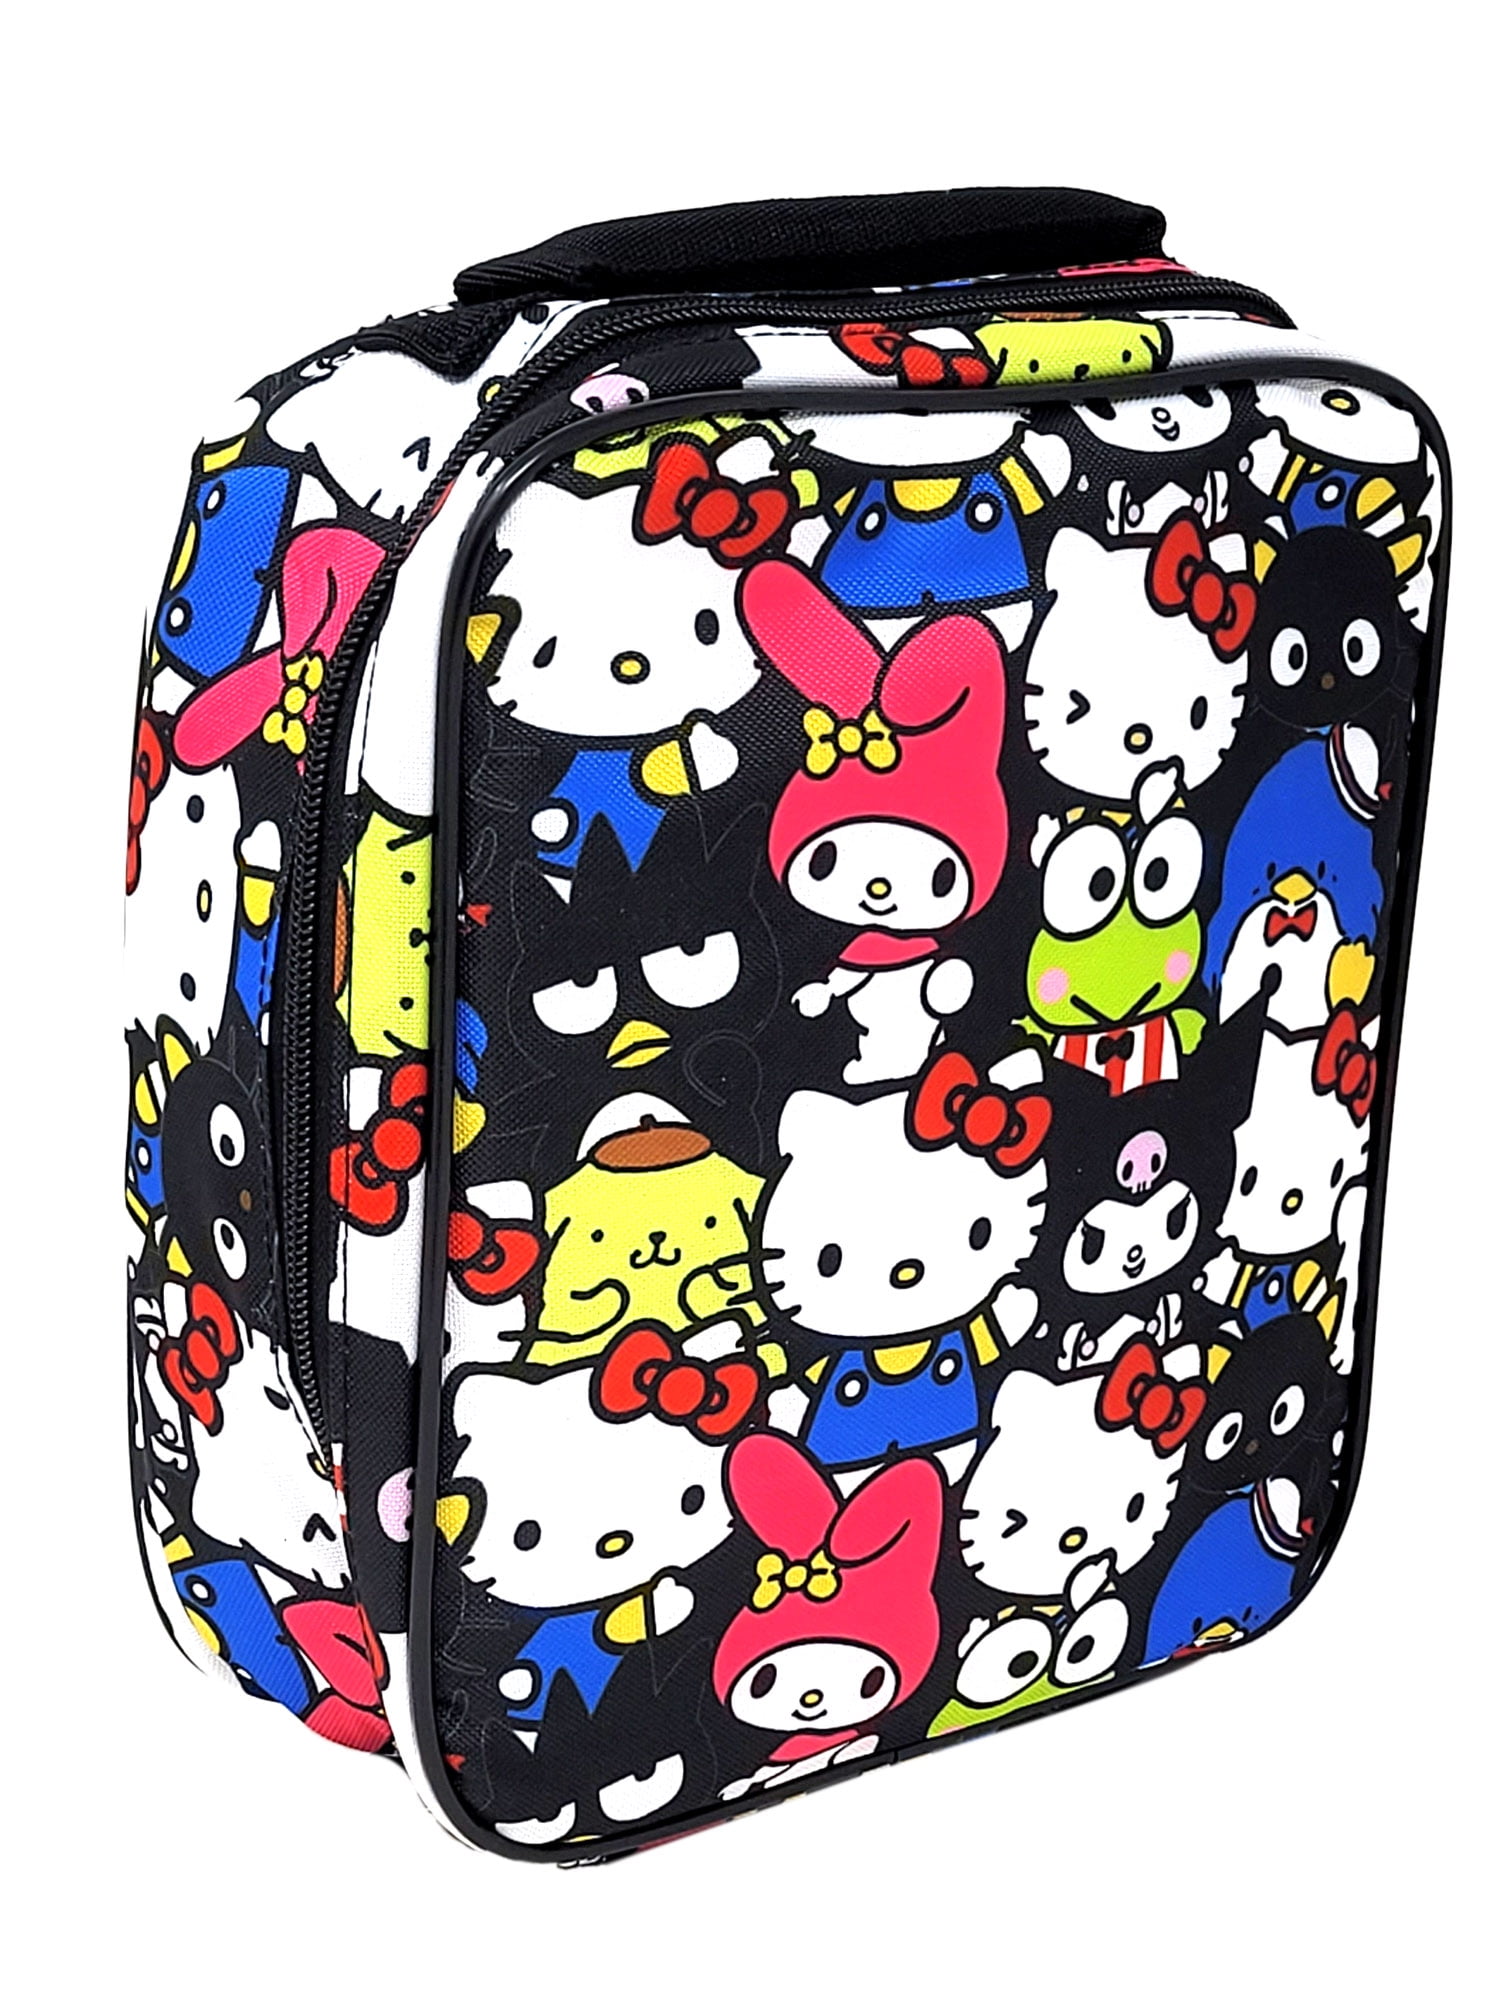 Hello Kitty Insulated Lunch Bag Keroppi Kuromi Melody Sanrio Sam Girls  Black 